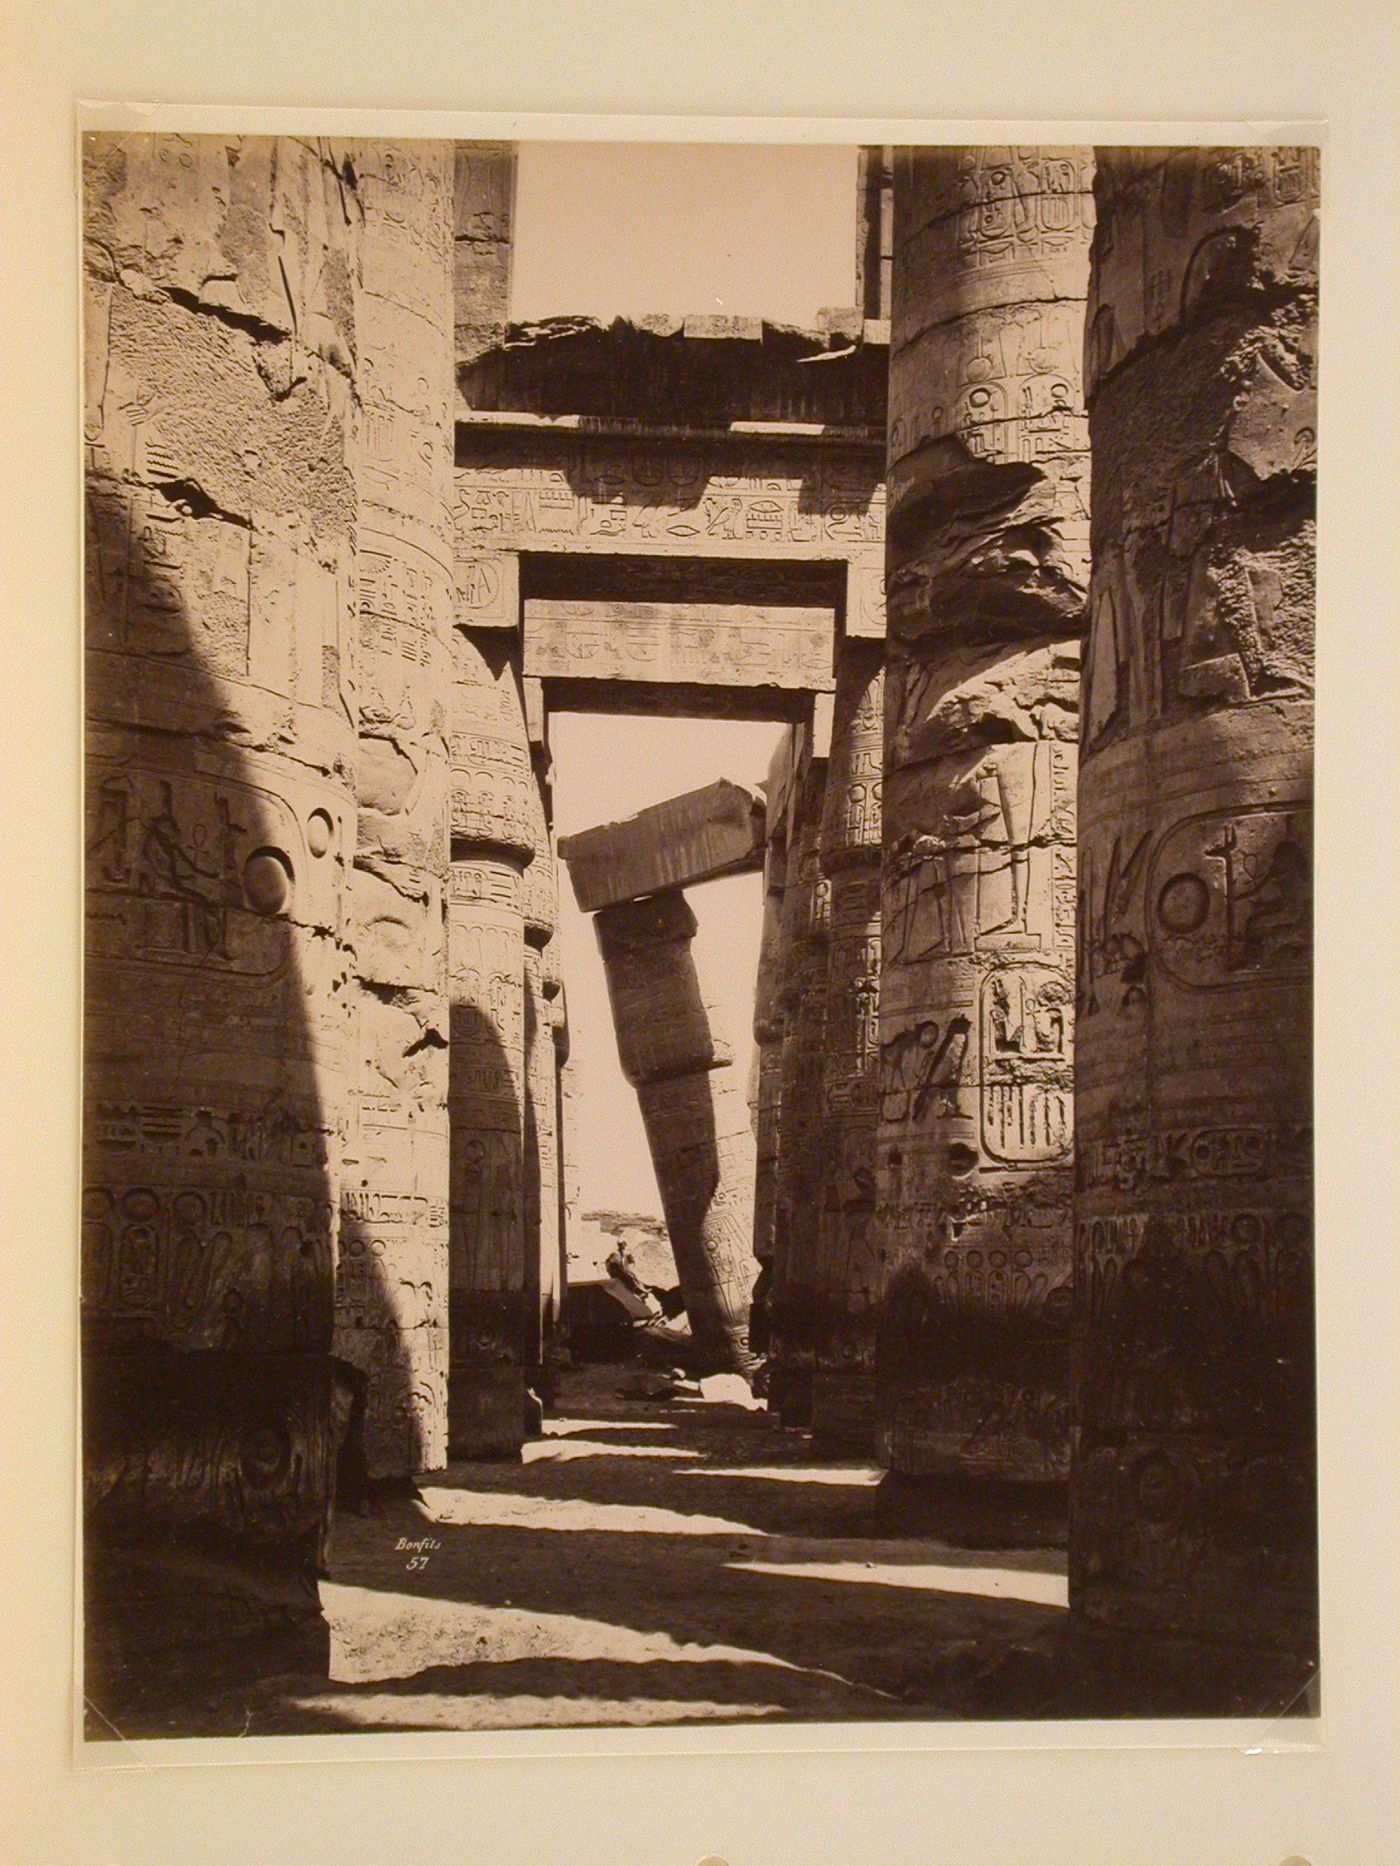 Colonne inclinee du Temple de Karnak, Egypte